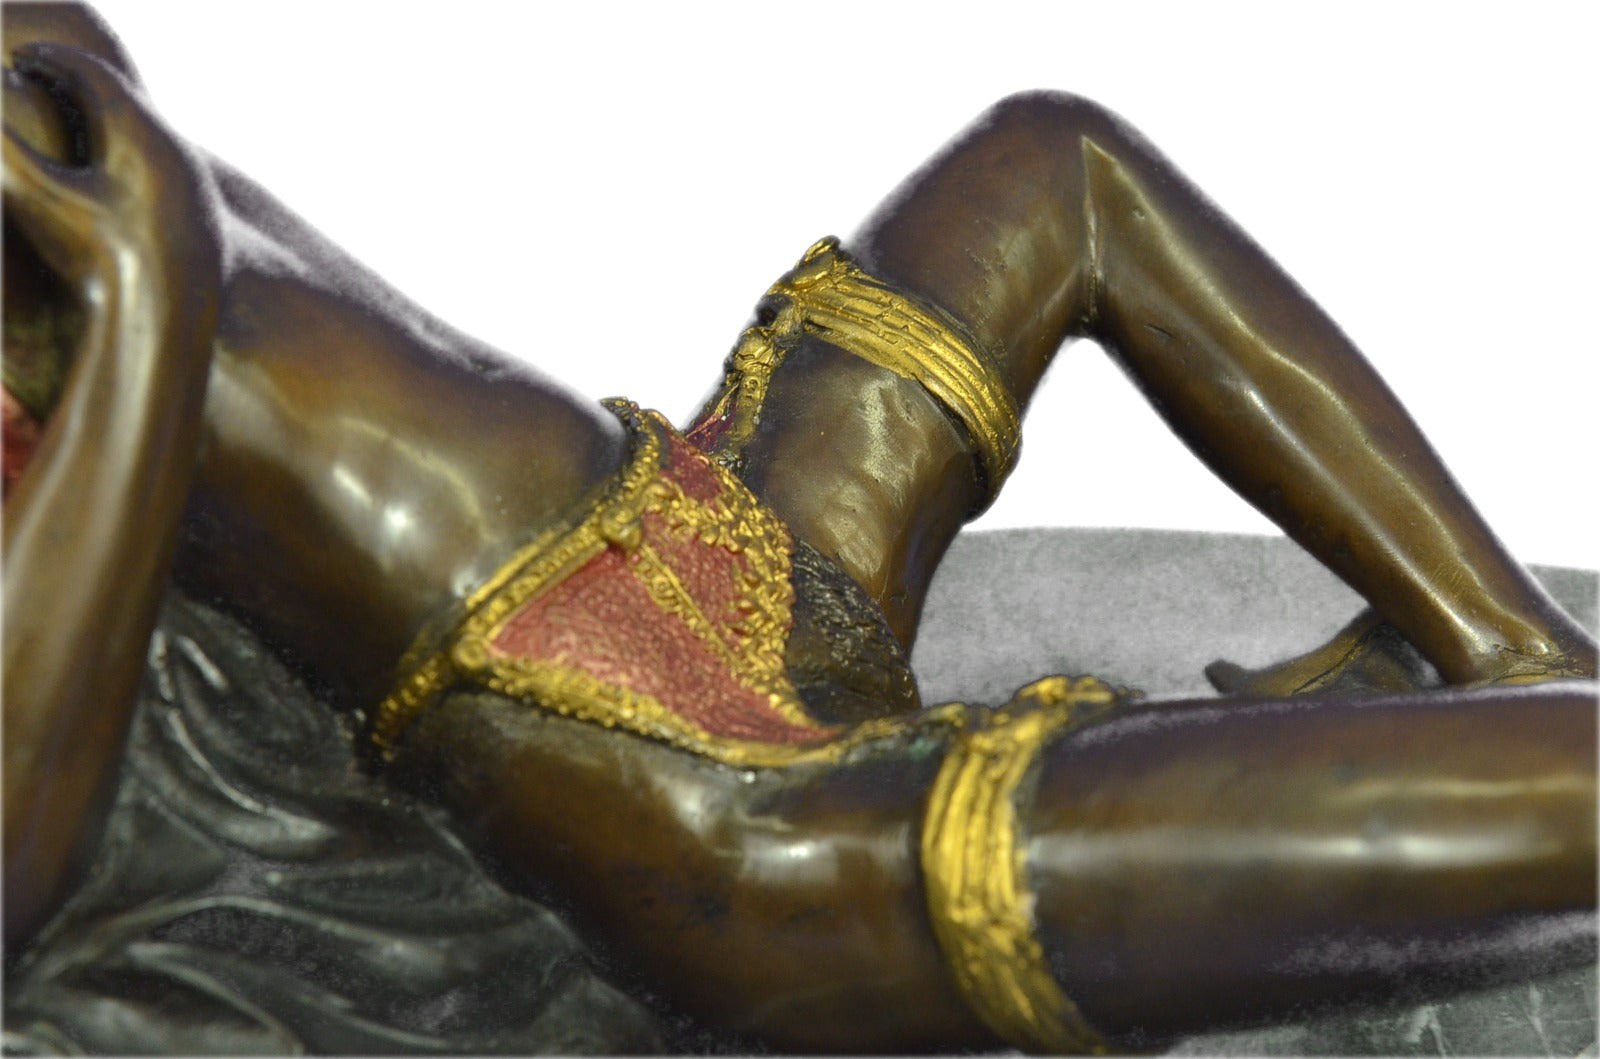 Erotic Art Handmade Collett Bronze Nude Female Figurine Sculpture Numbered